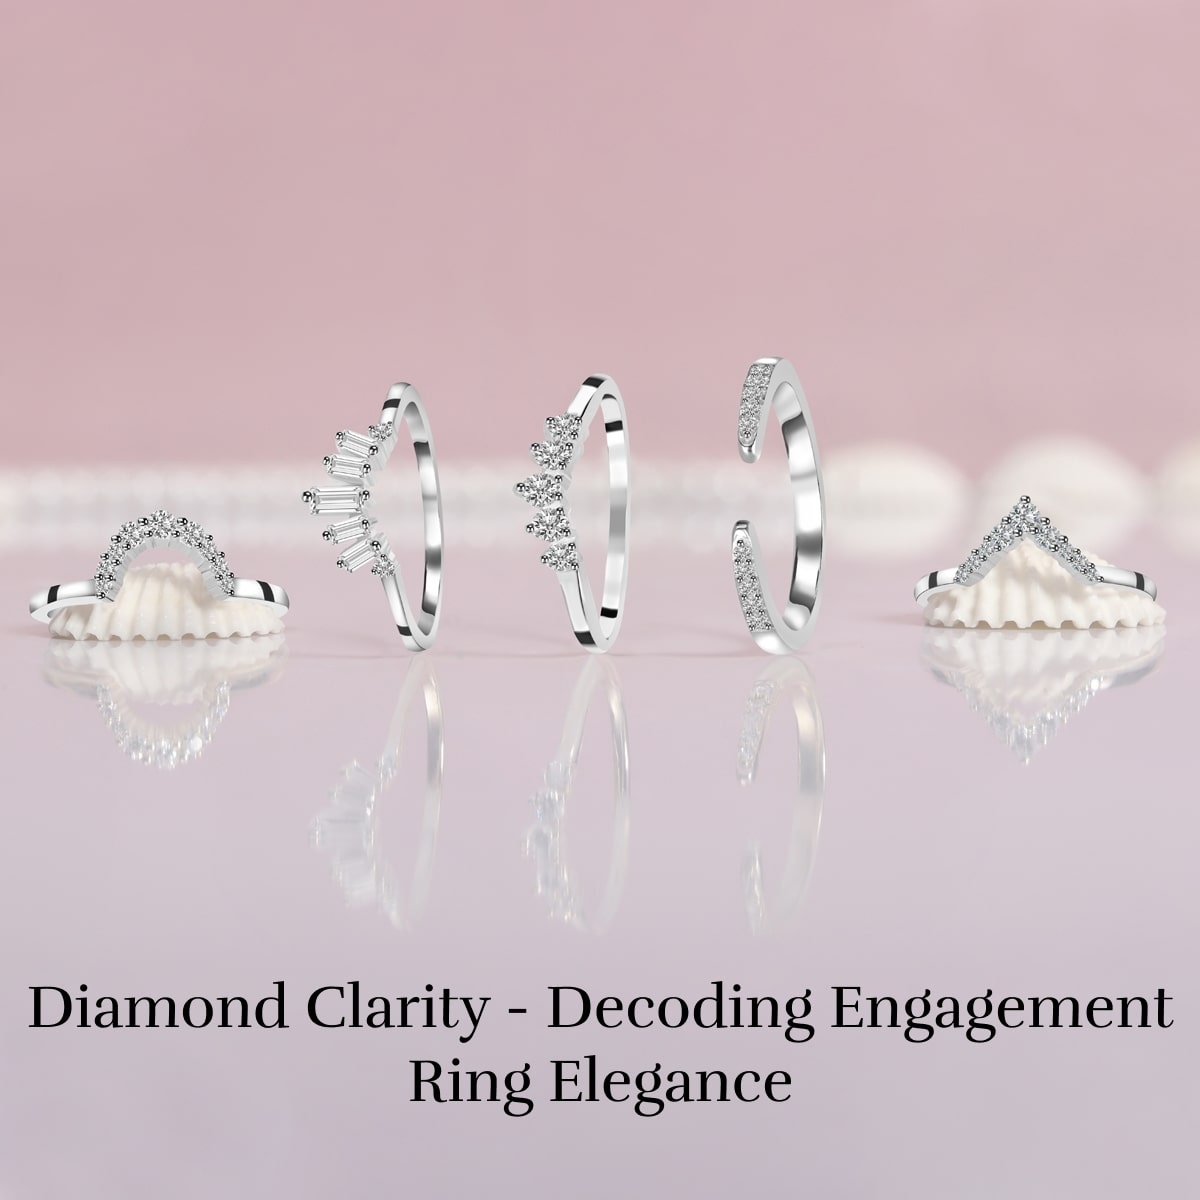 Diamonds in Engagement Rings